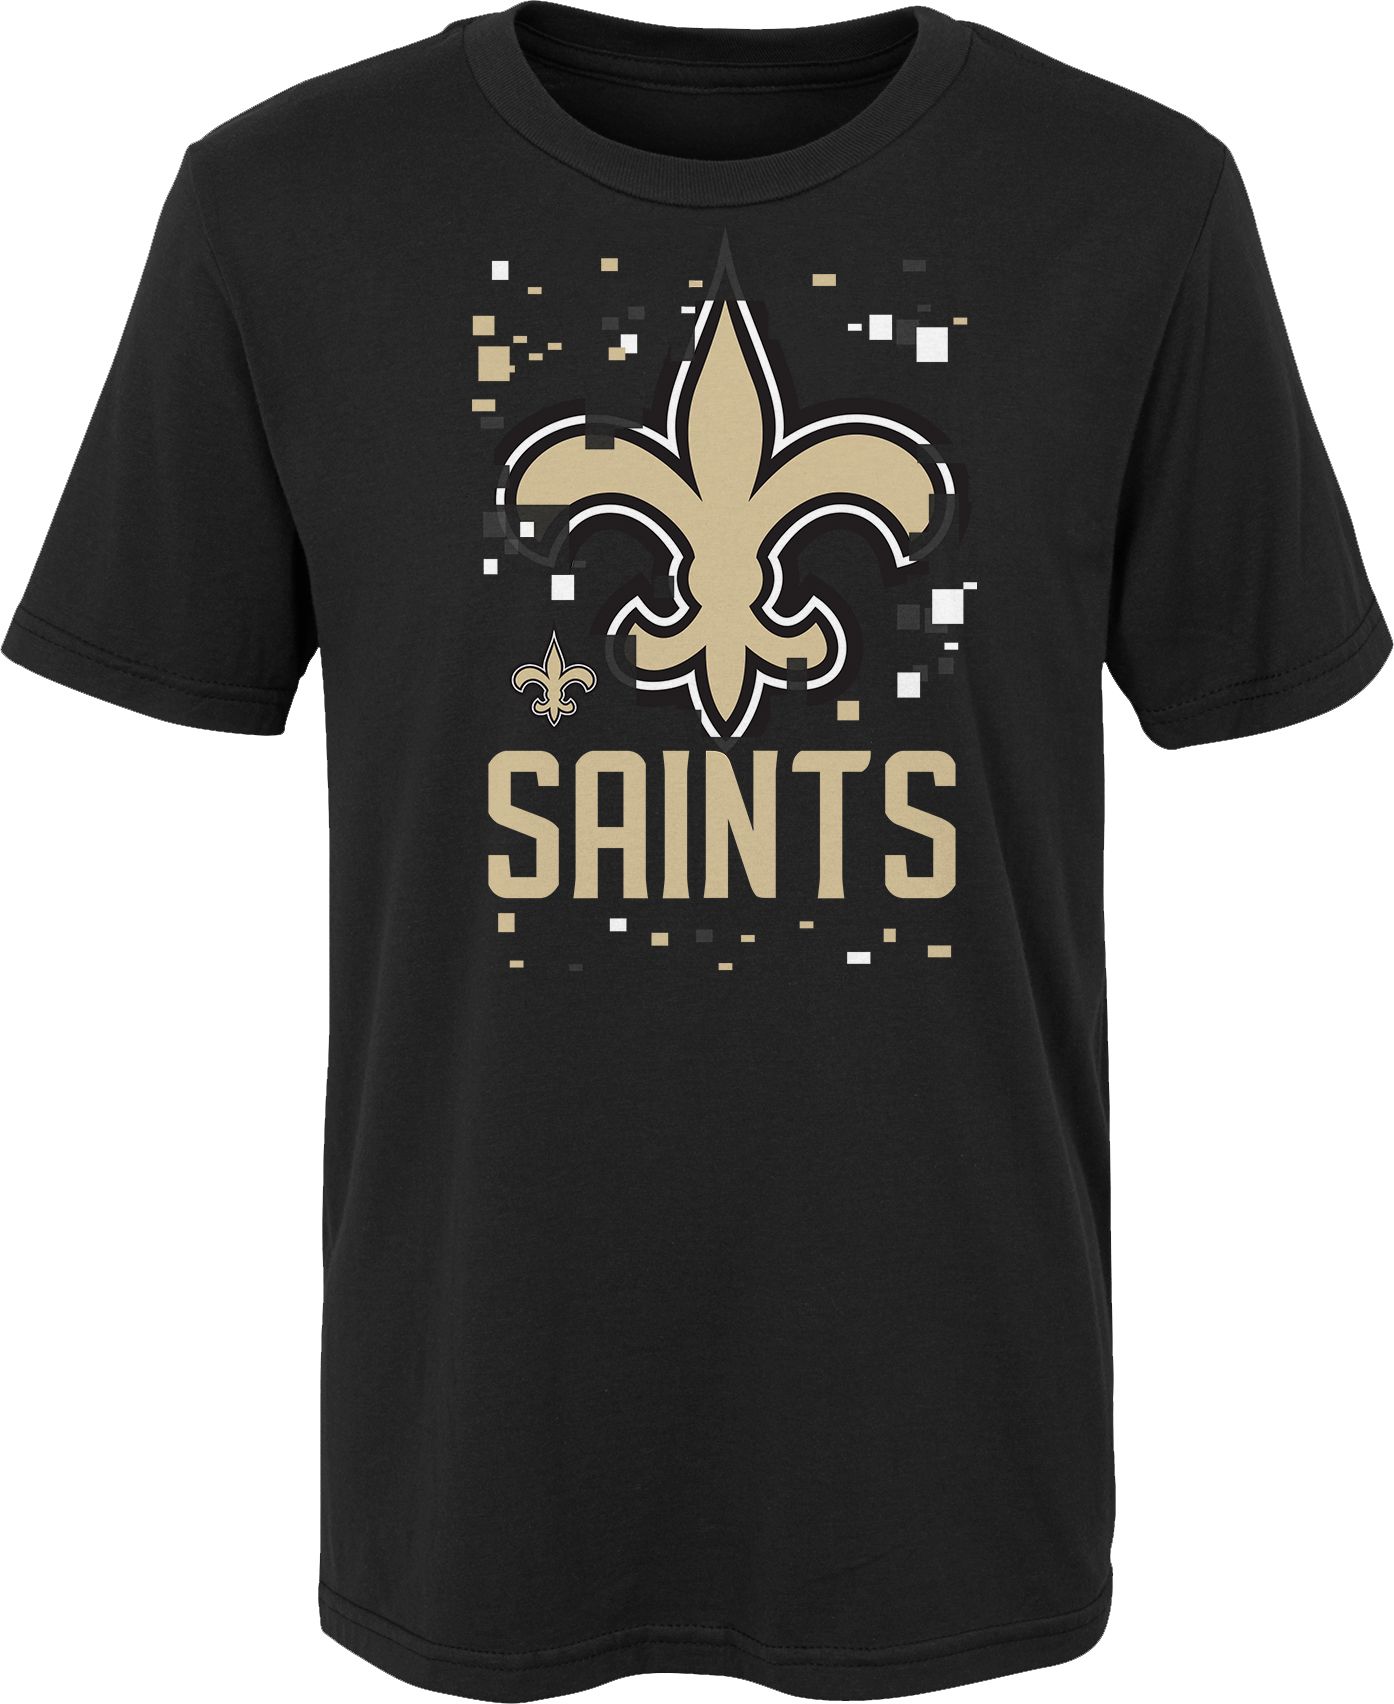 saints shirts for kids